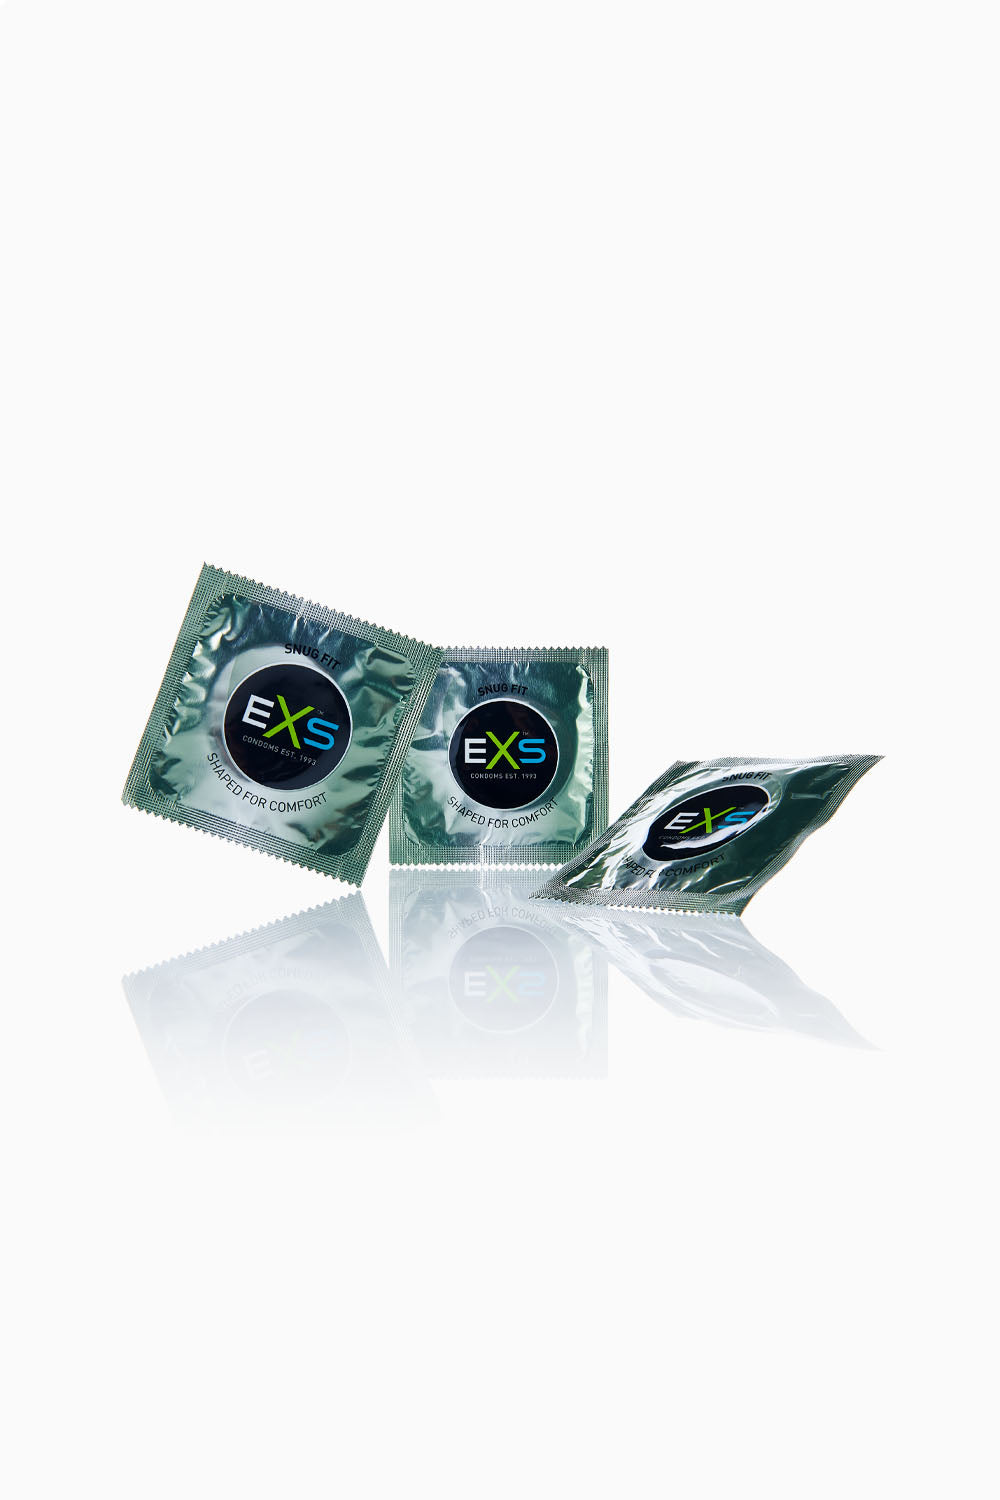 EXS Snug Fit Condoms 24 Pack